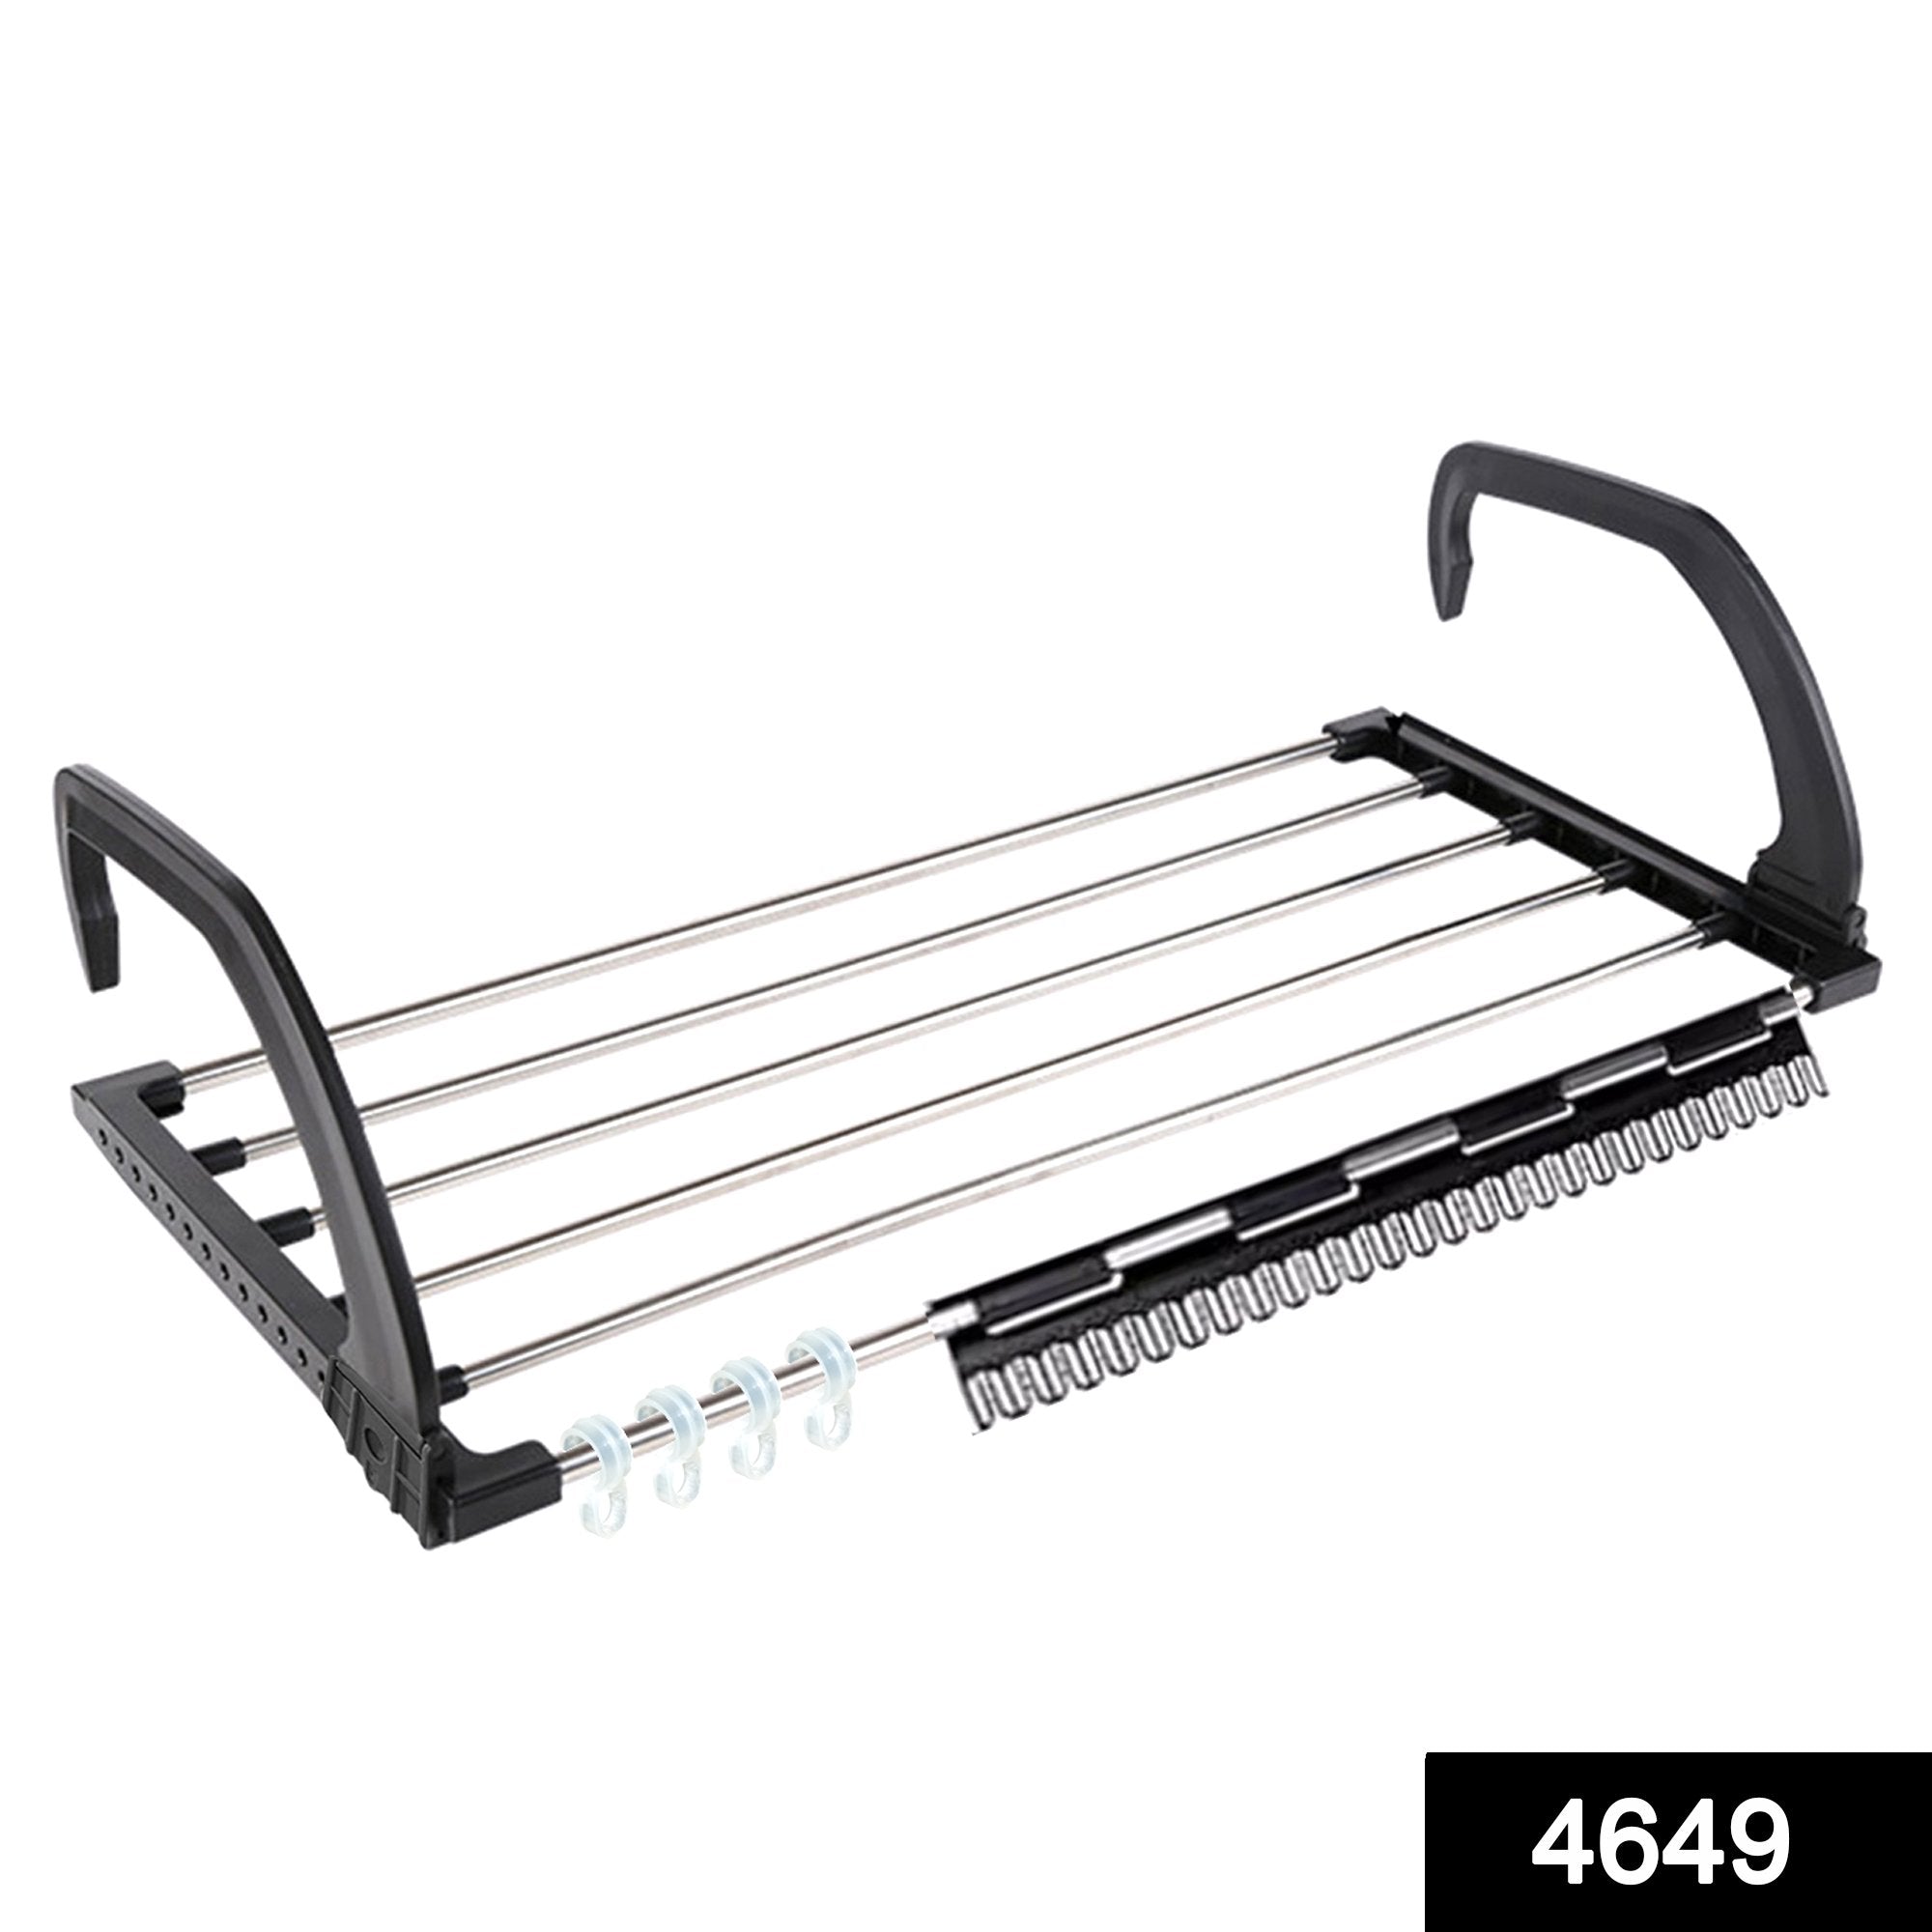 4649 Adjustable Folding Clothes Drying Racks Hanger Shelf DeoDap